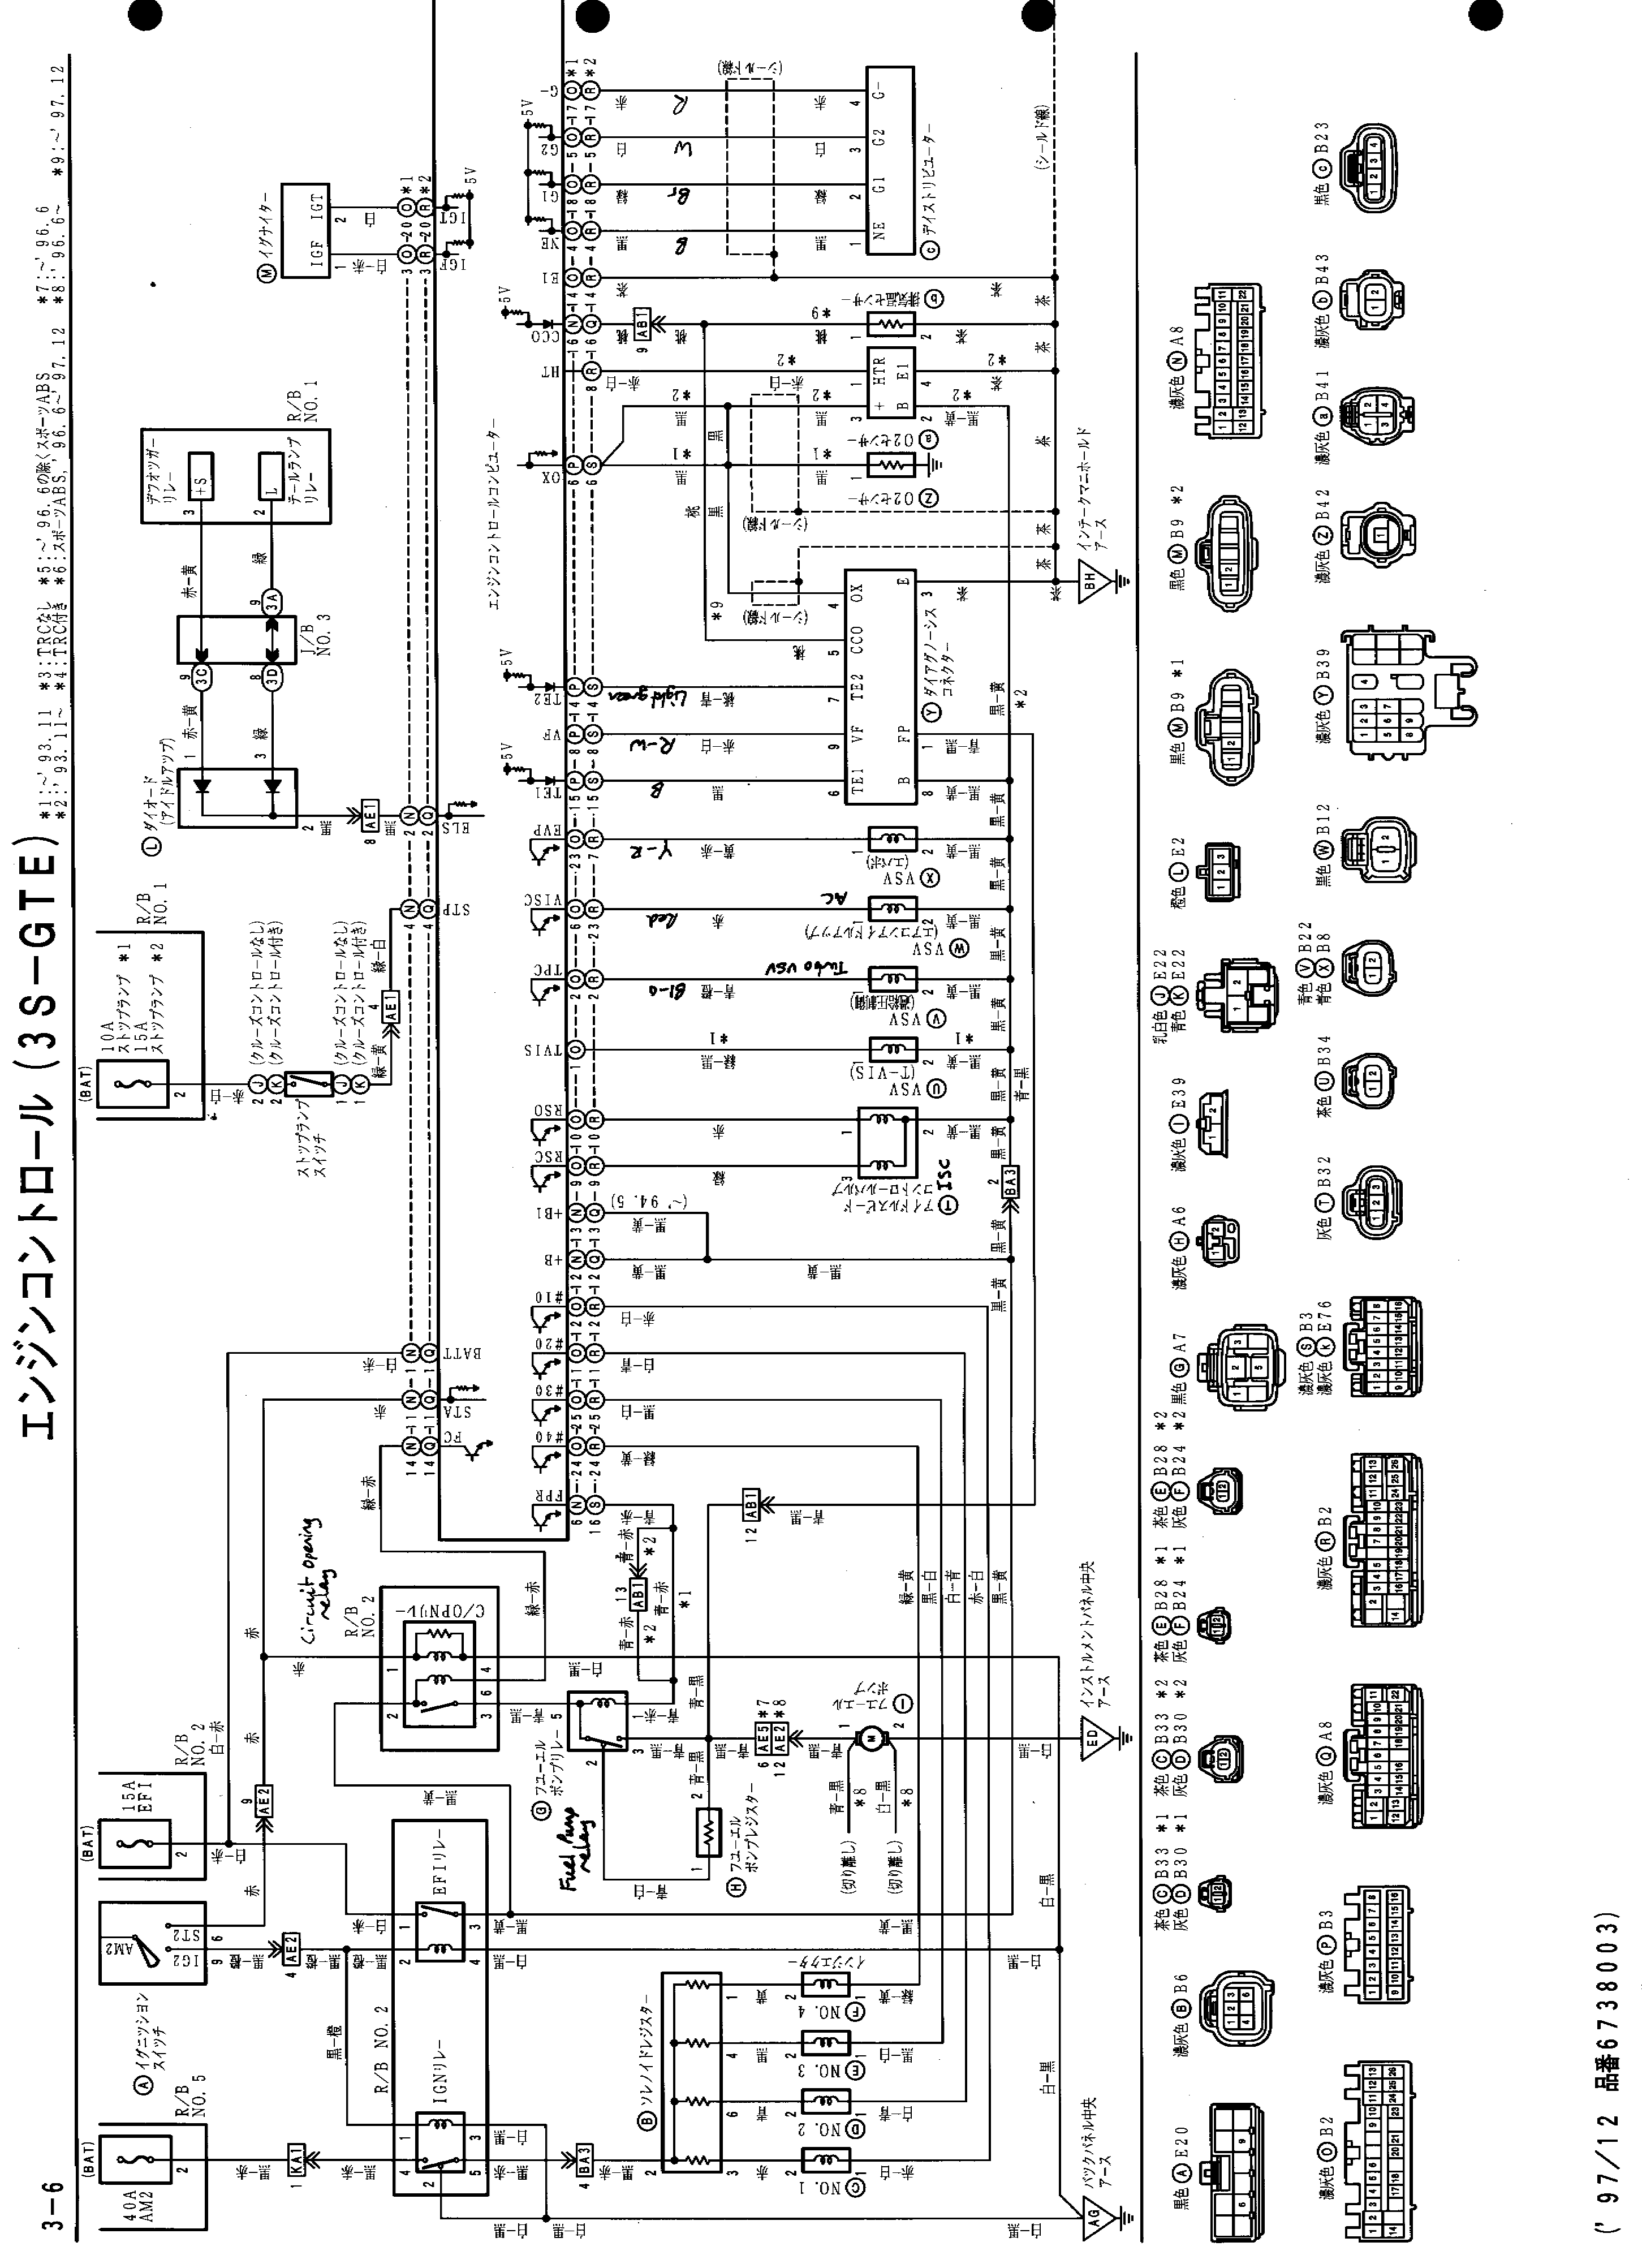 [DIAGRAM] 2000 Toyota Mr2 Fuse Diagram FULL Version HD Quality Fuse